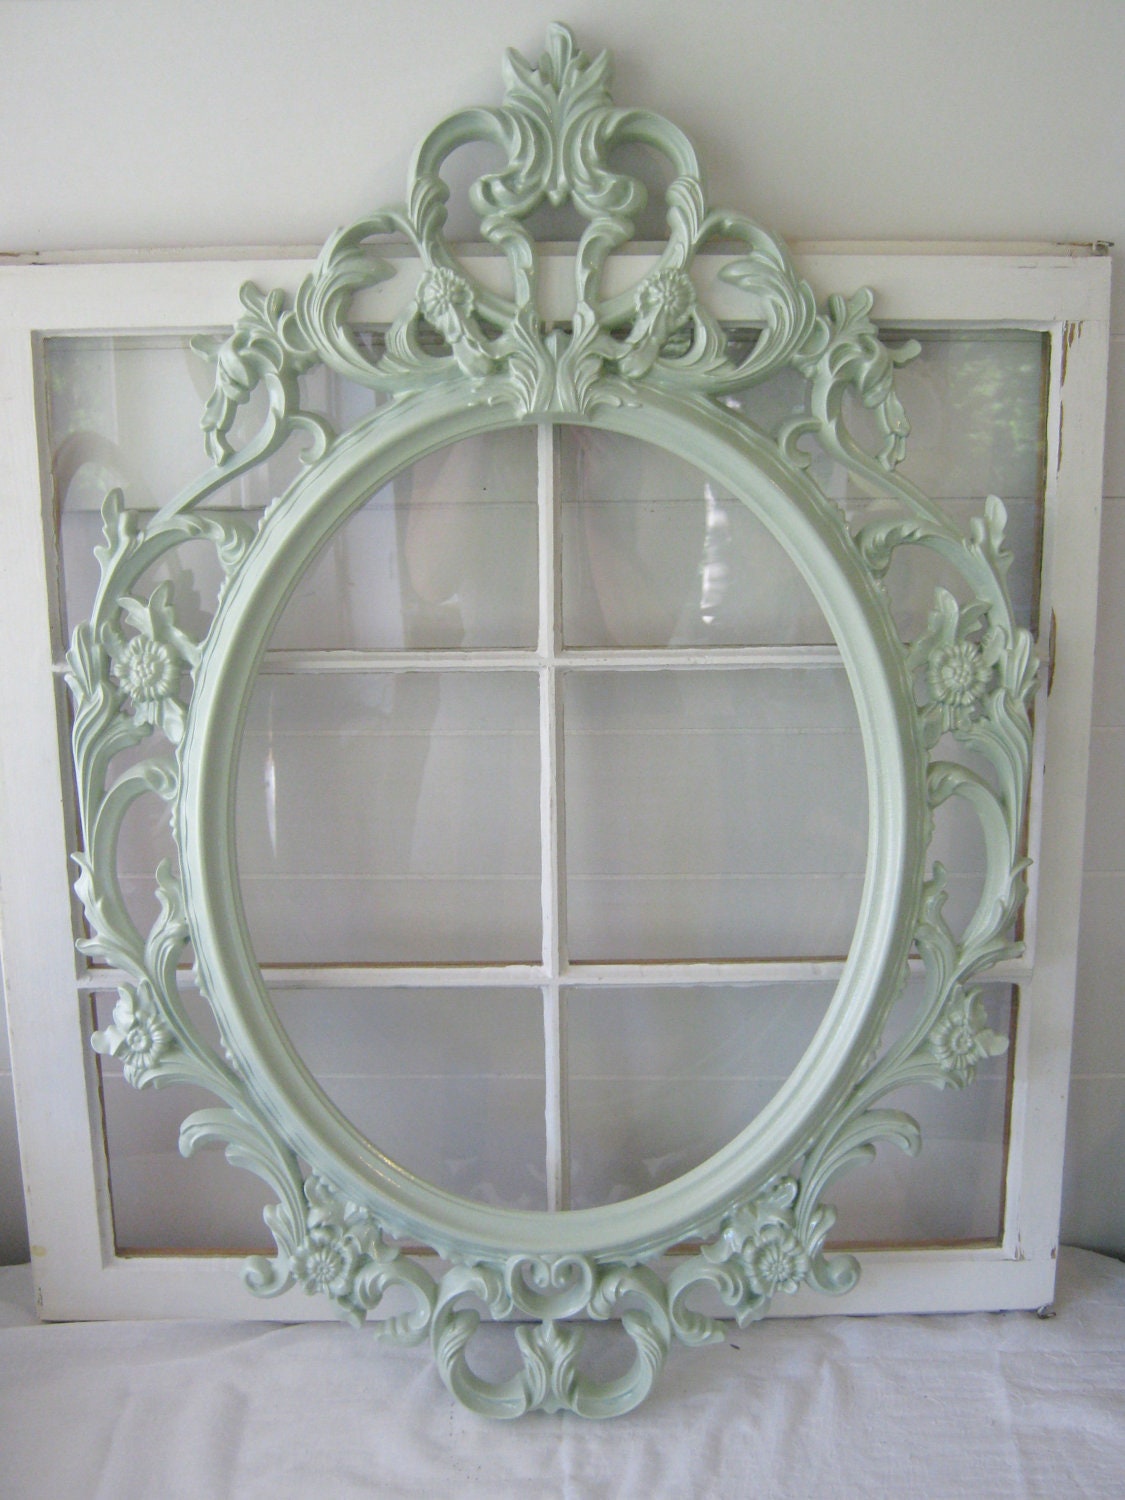 Baroque Oval Frame